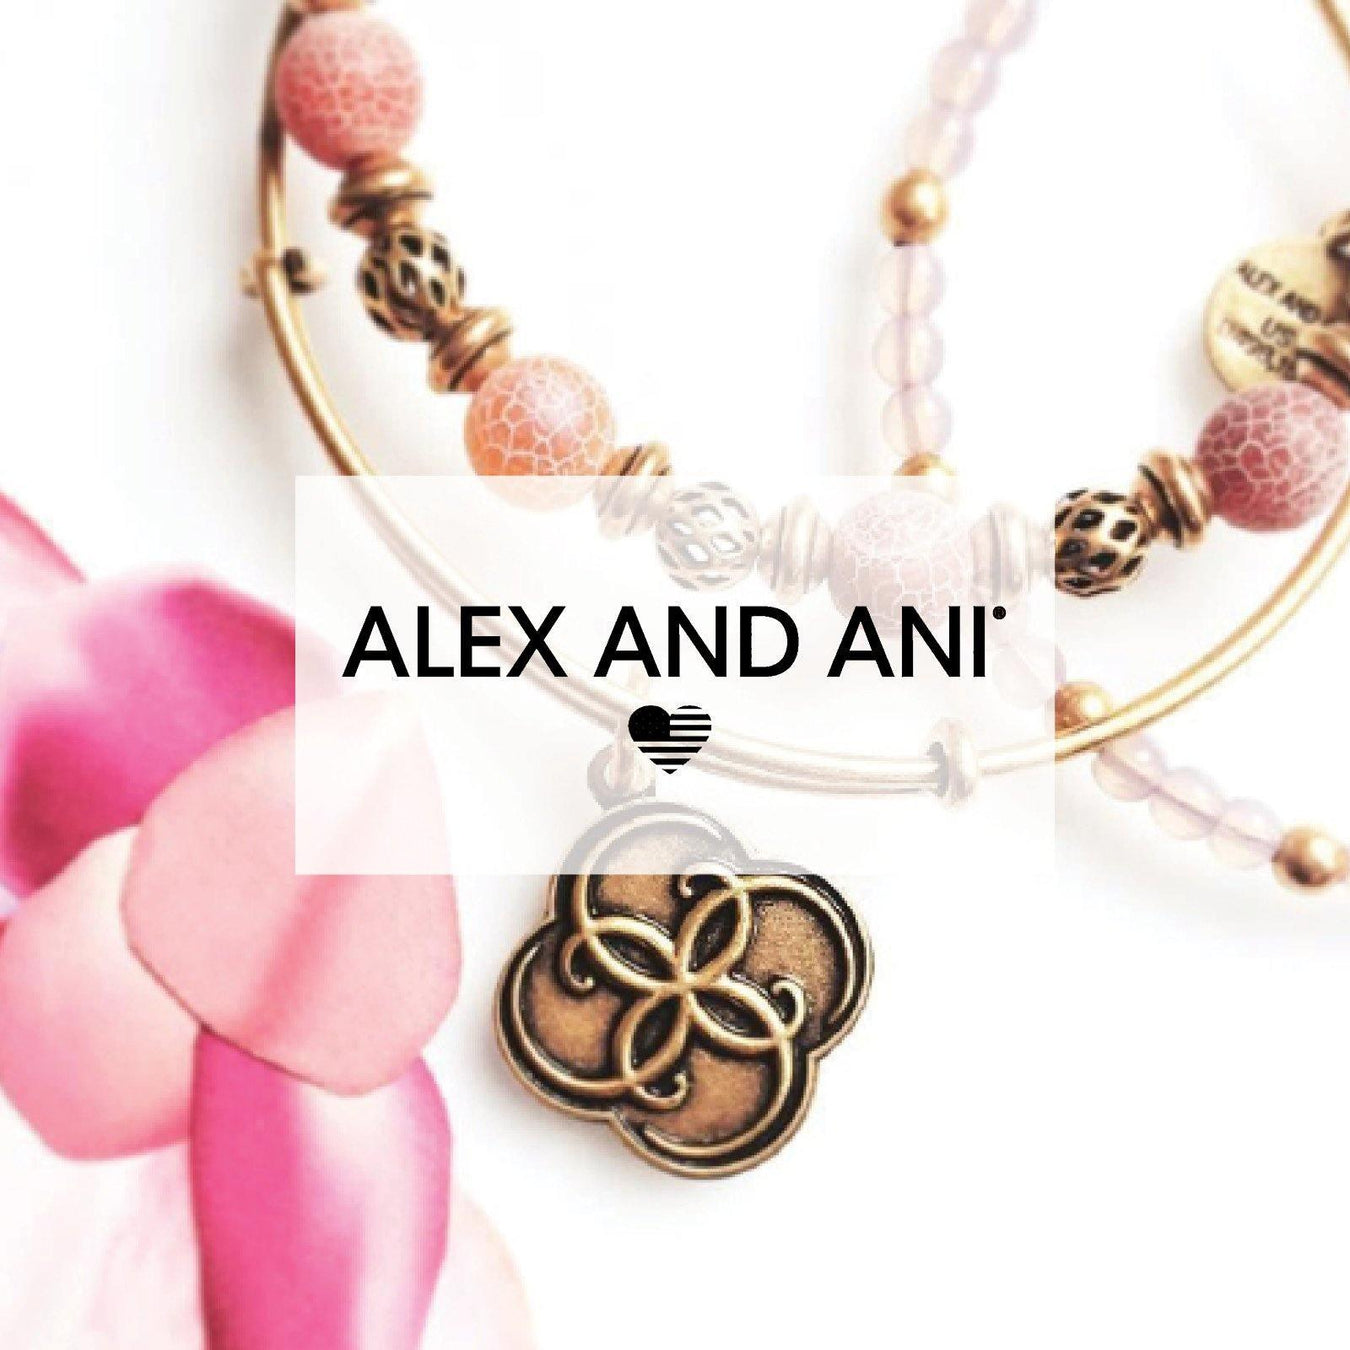 ALEX AND ANI - Annies Hallmark and Gretchens Hallmark, Sister Stores